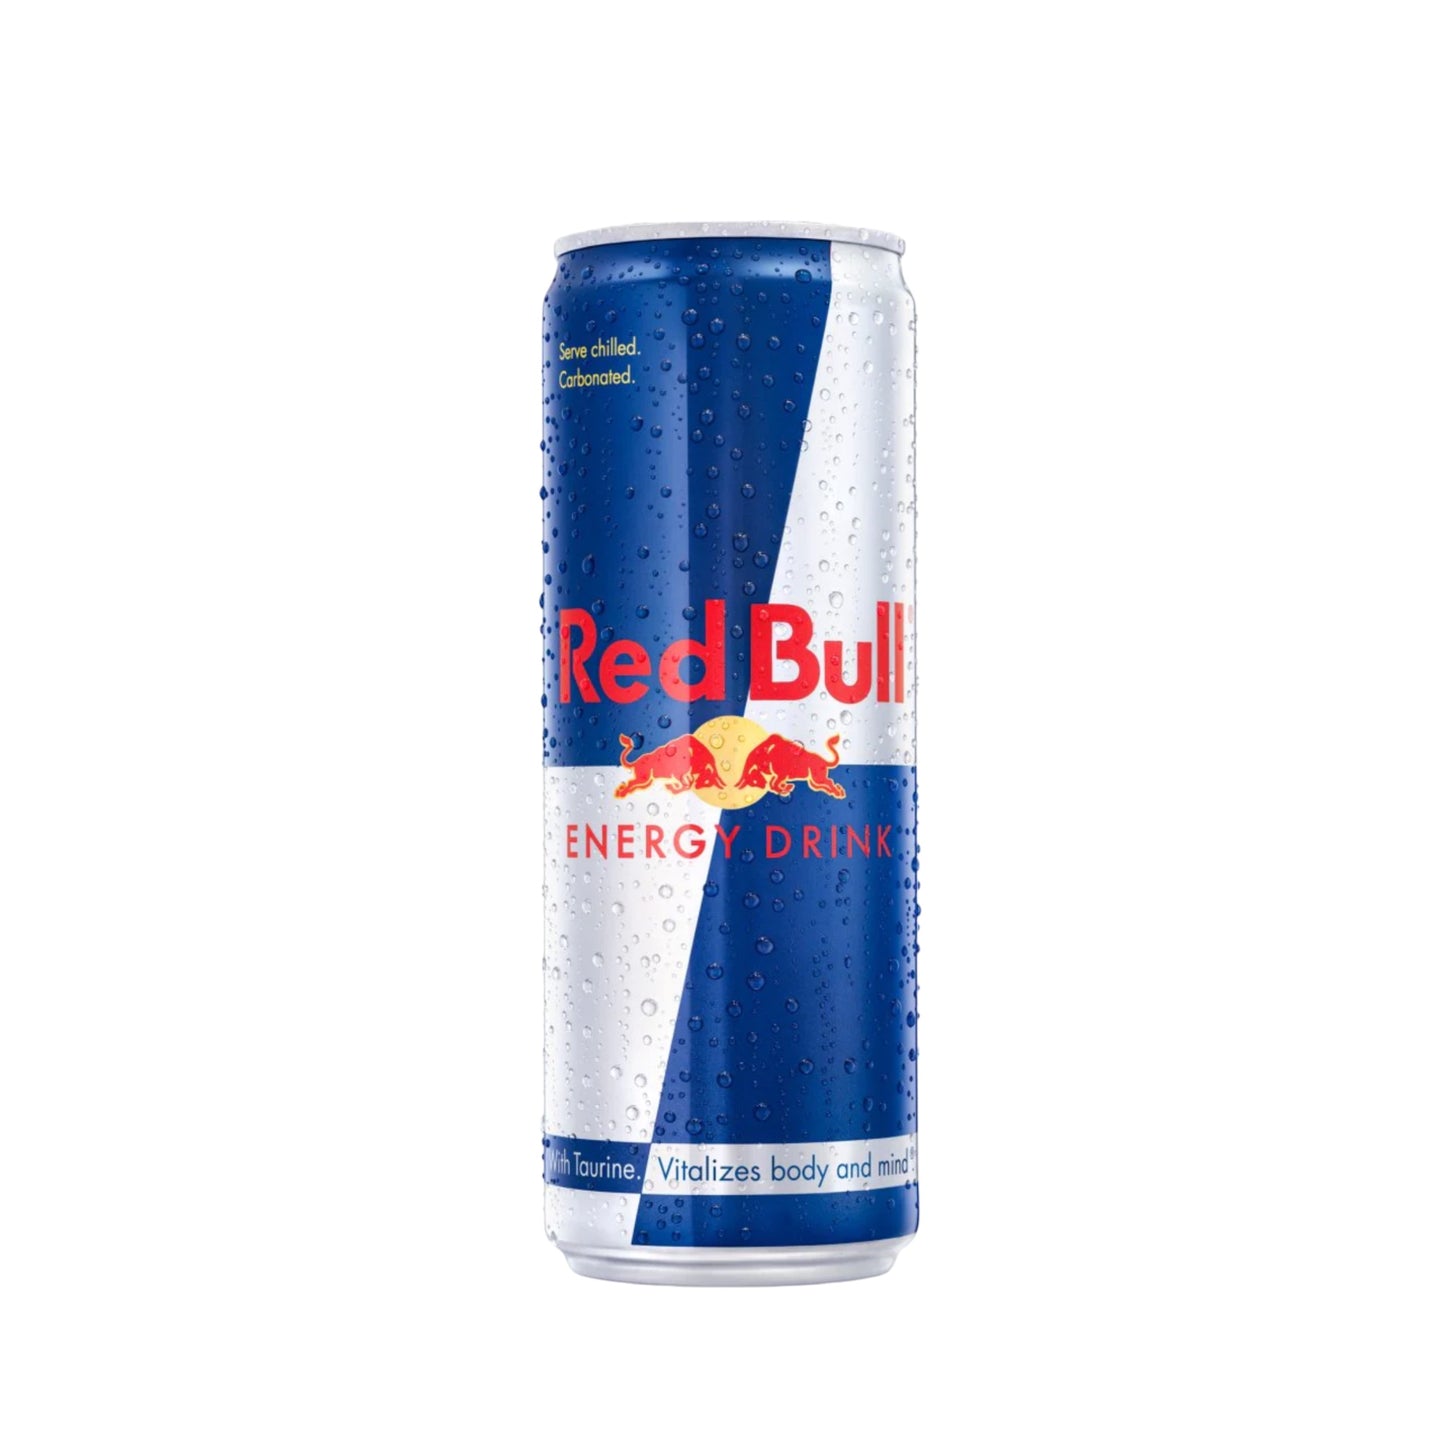 Red Bull Energy Drink - 355ml (PMP £1.85)